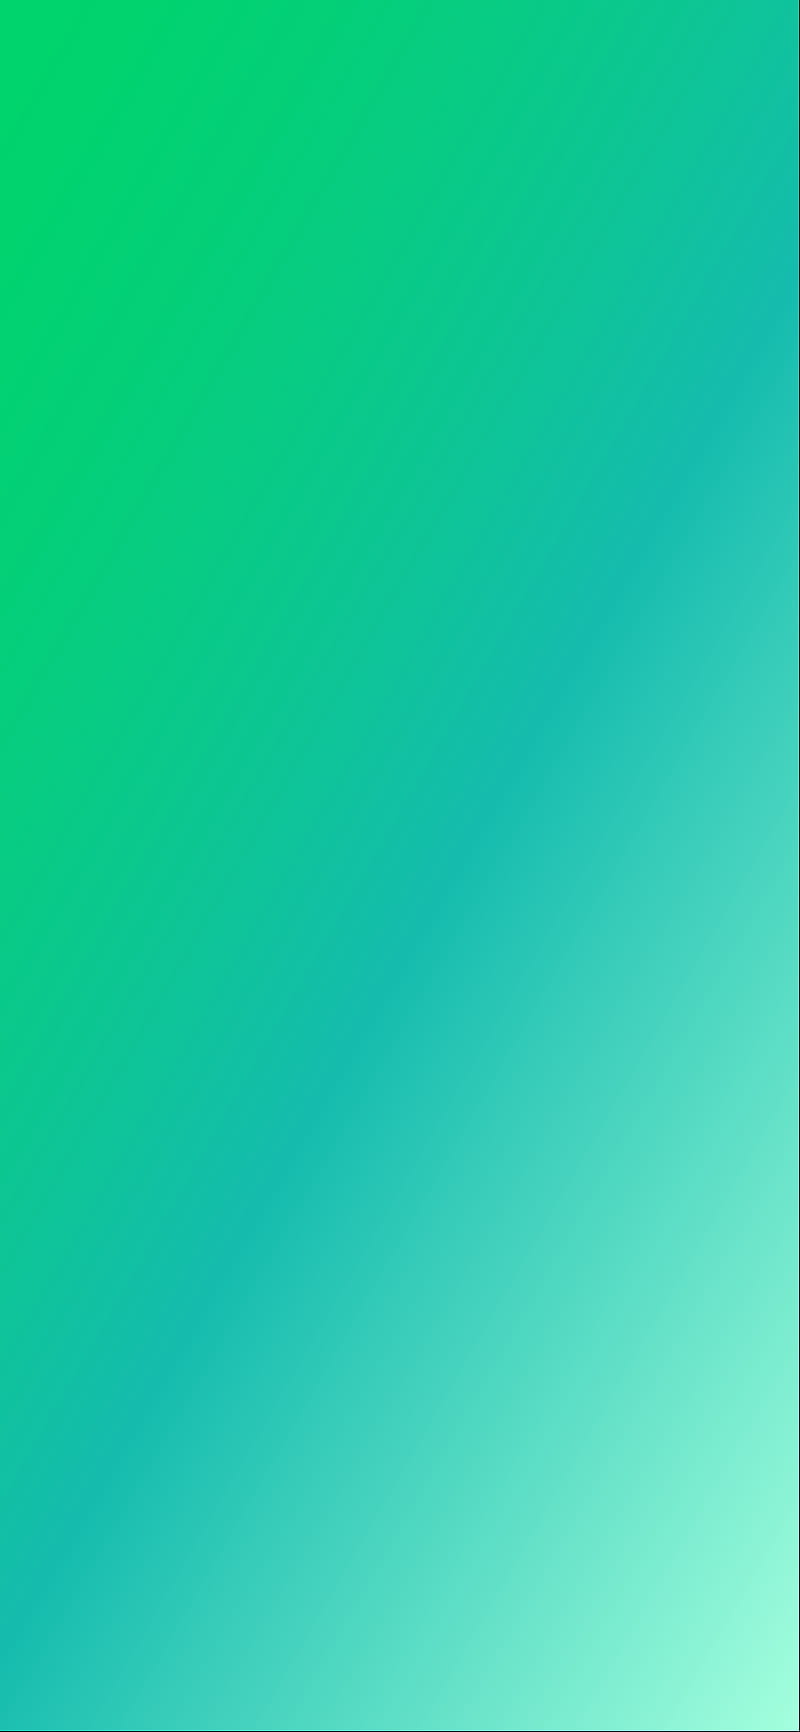 https://w0.peakpx.com/wallpaper/428/1010/HD-wallpaper-aqua-gradient-color-colors-green-solid-turquoise.jpg